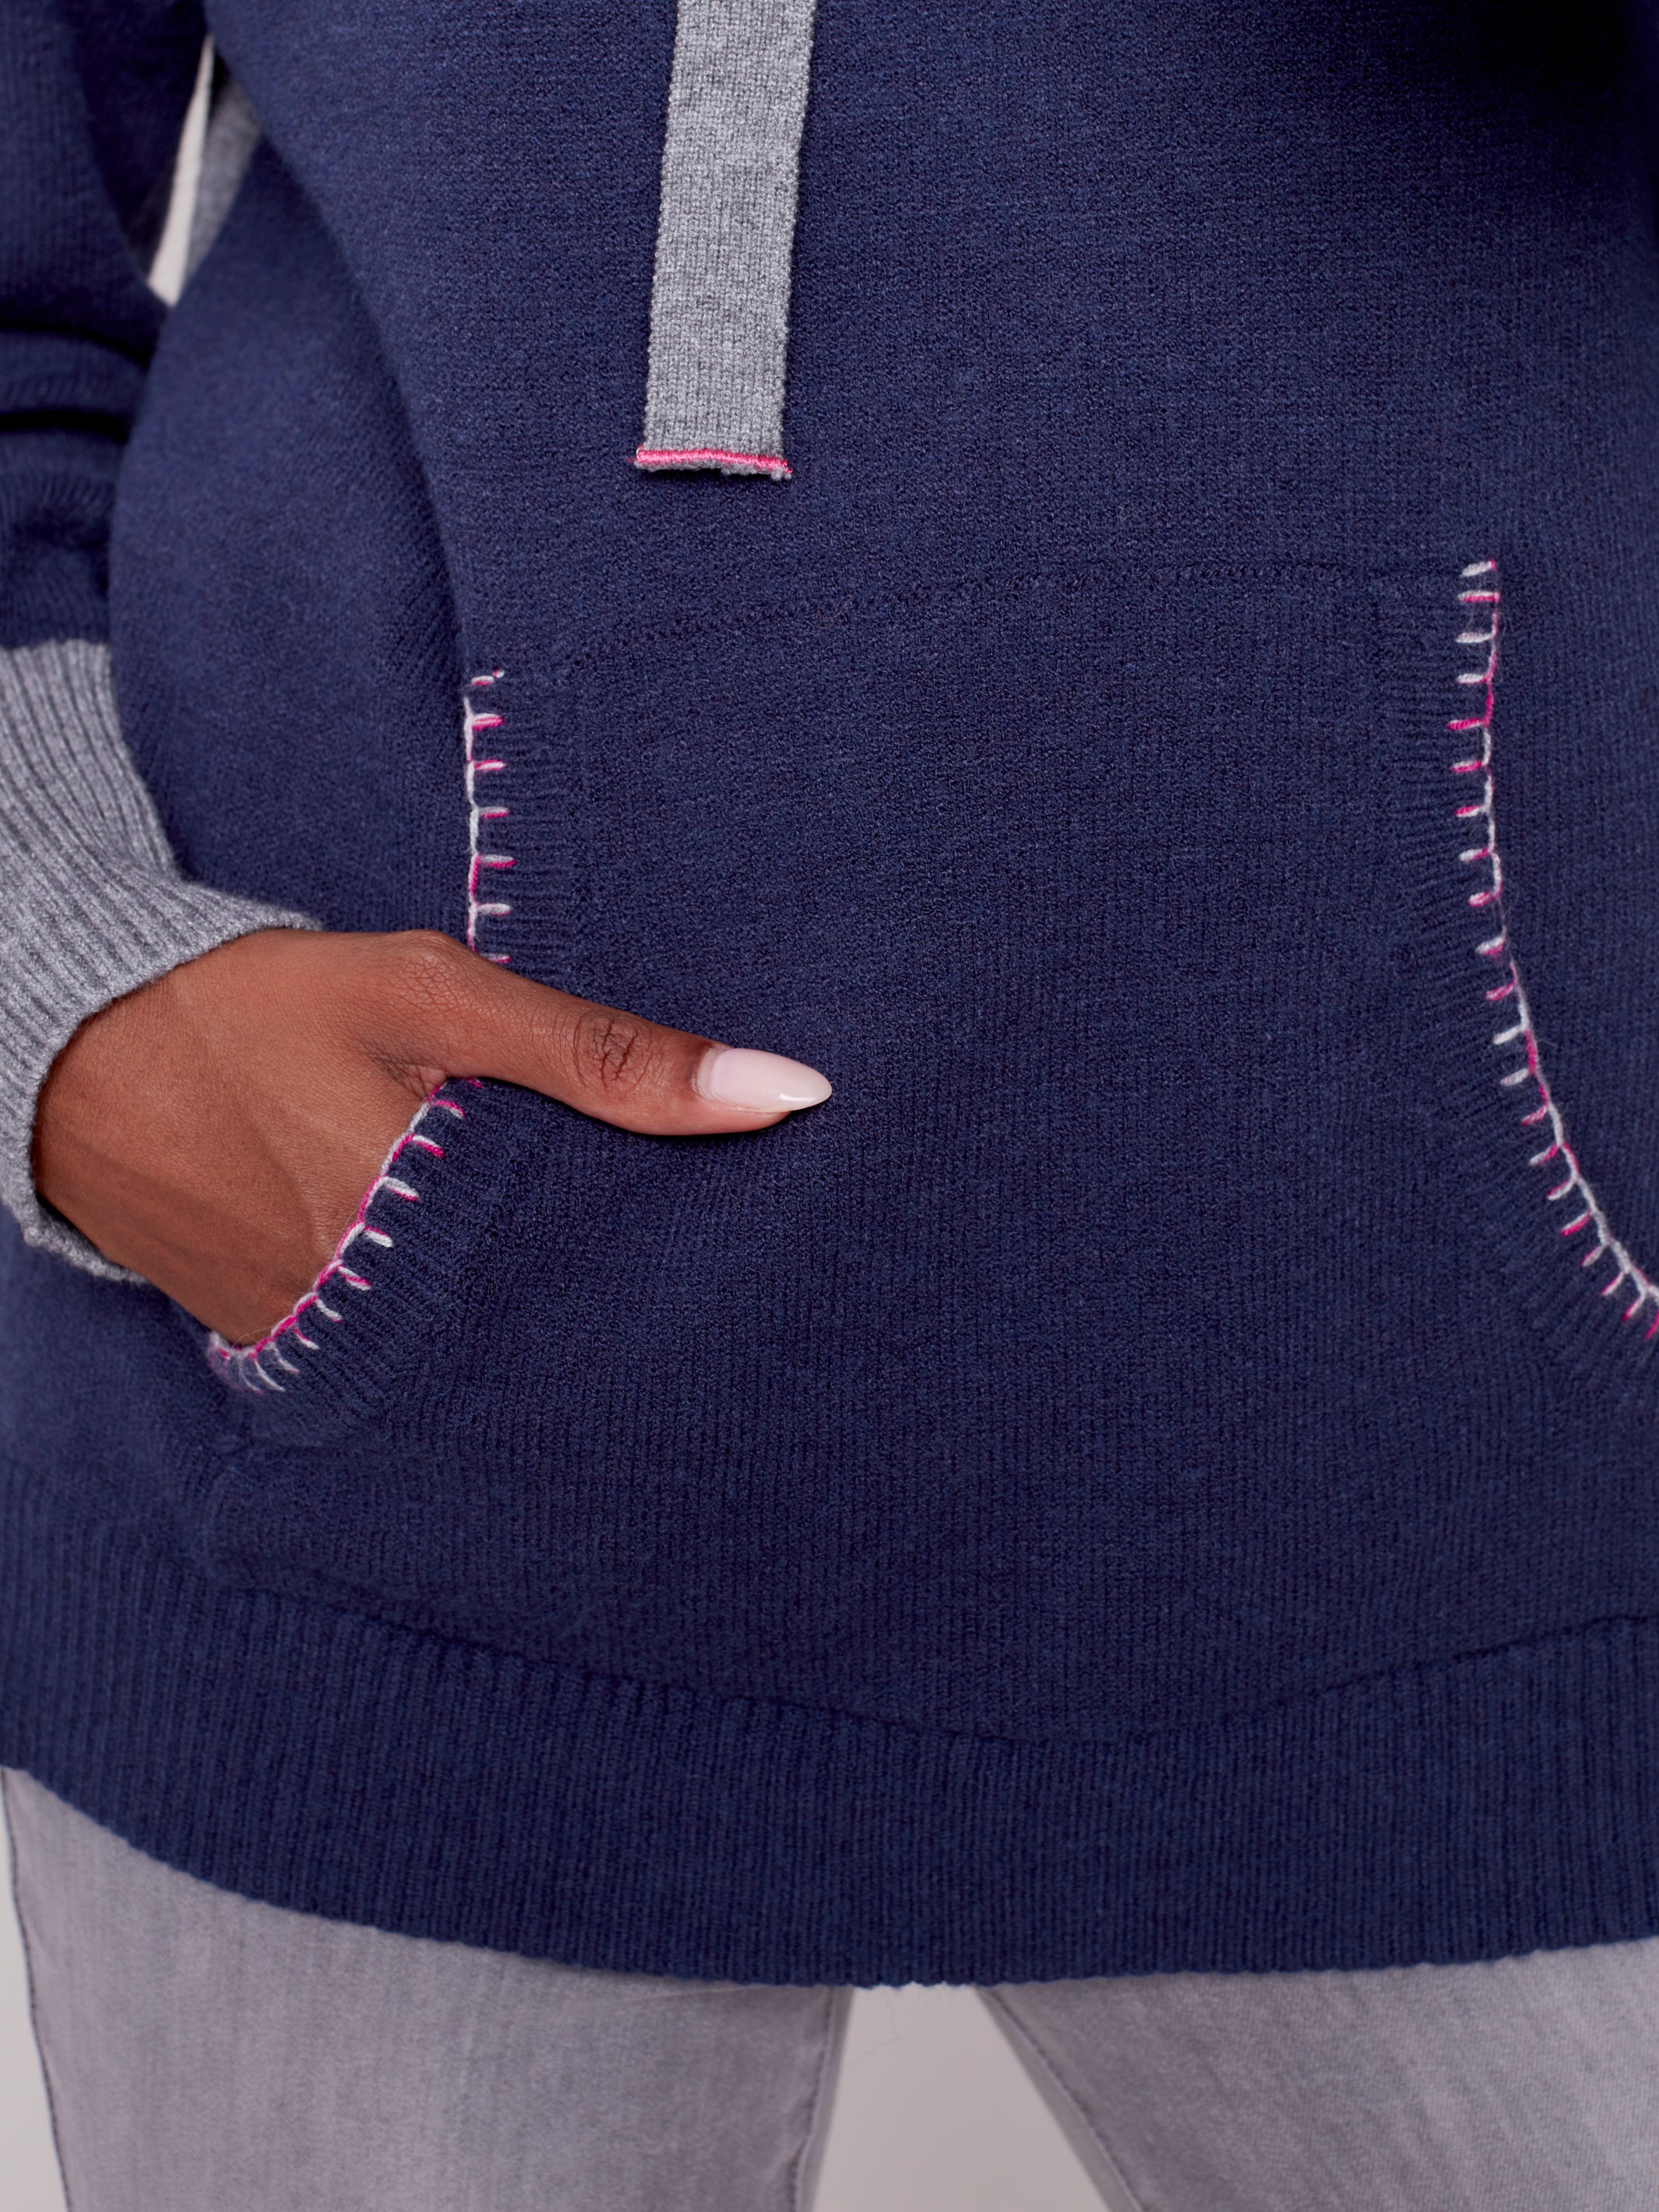 Hoodie Sweater by Charlie B